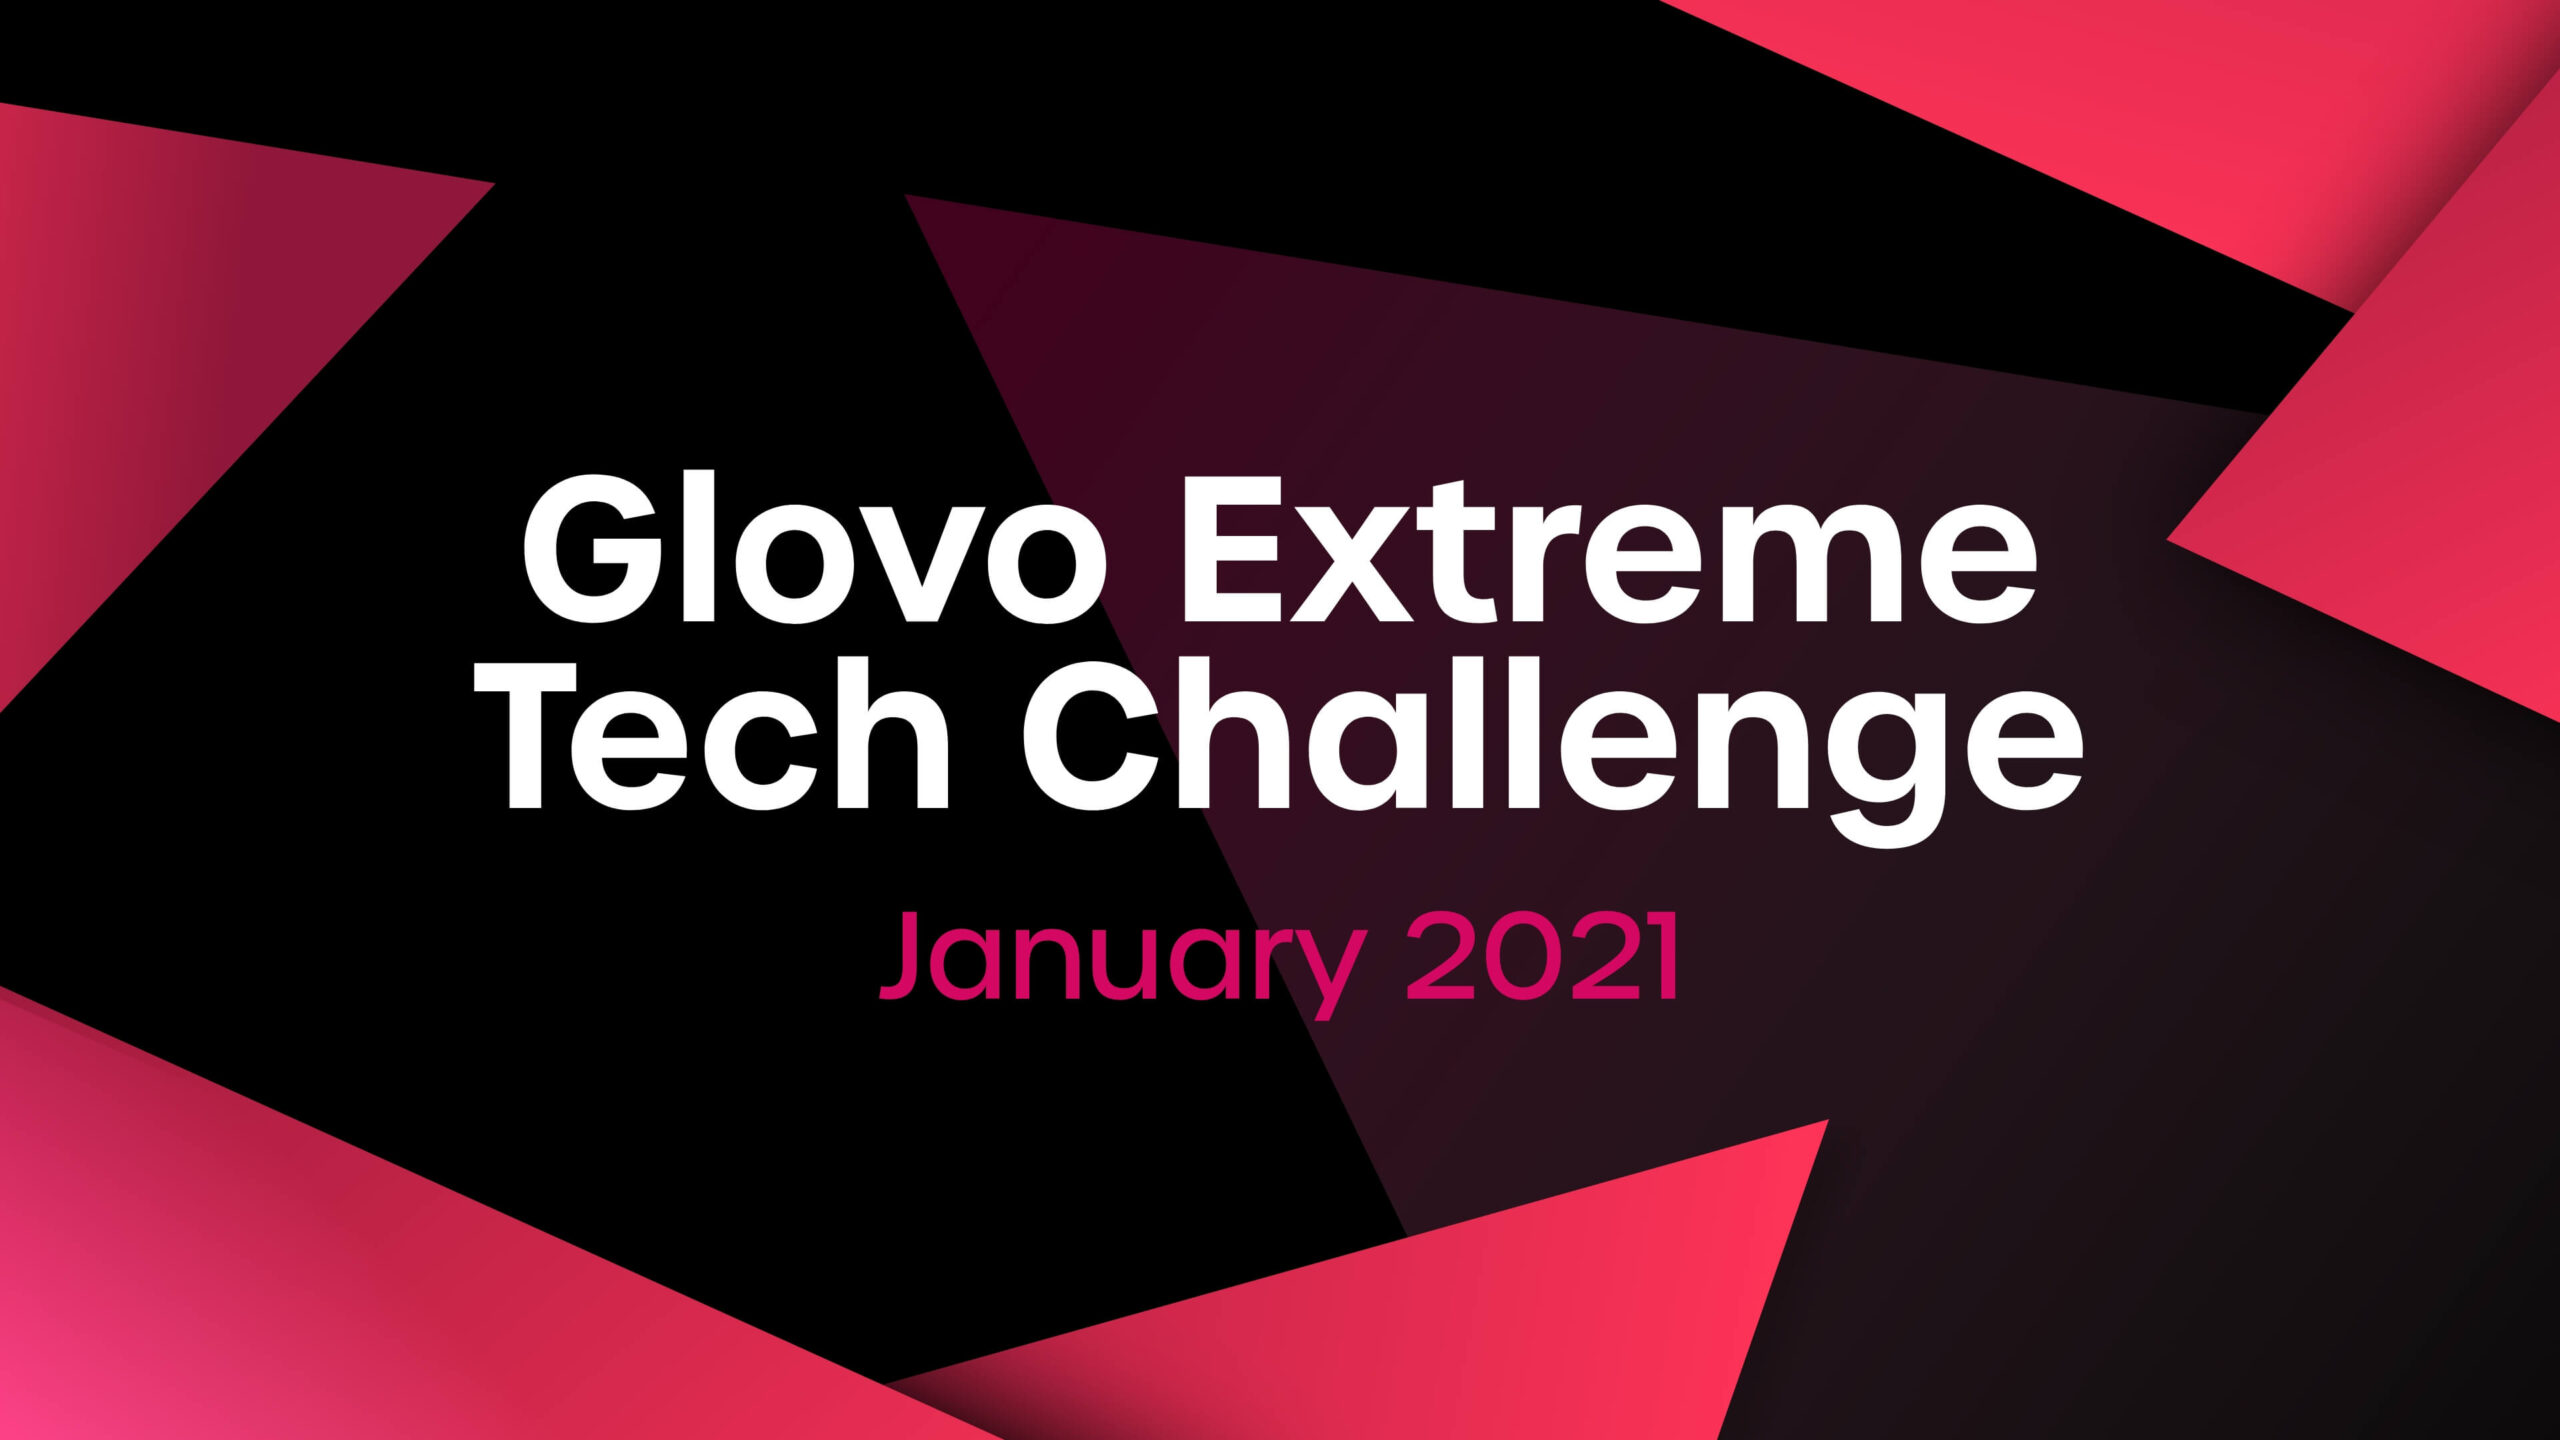 Glovo Extreme Tech Challenge